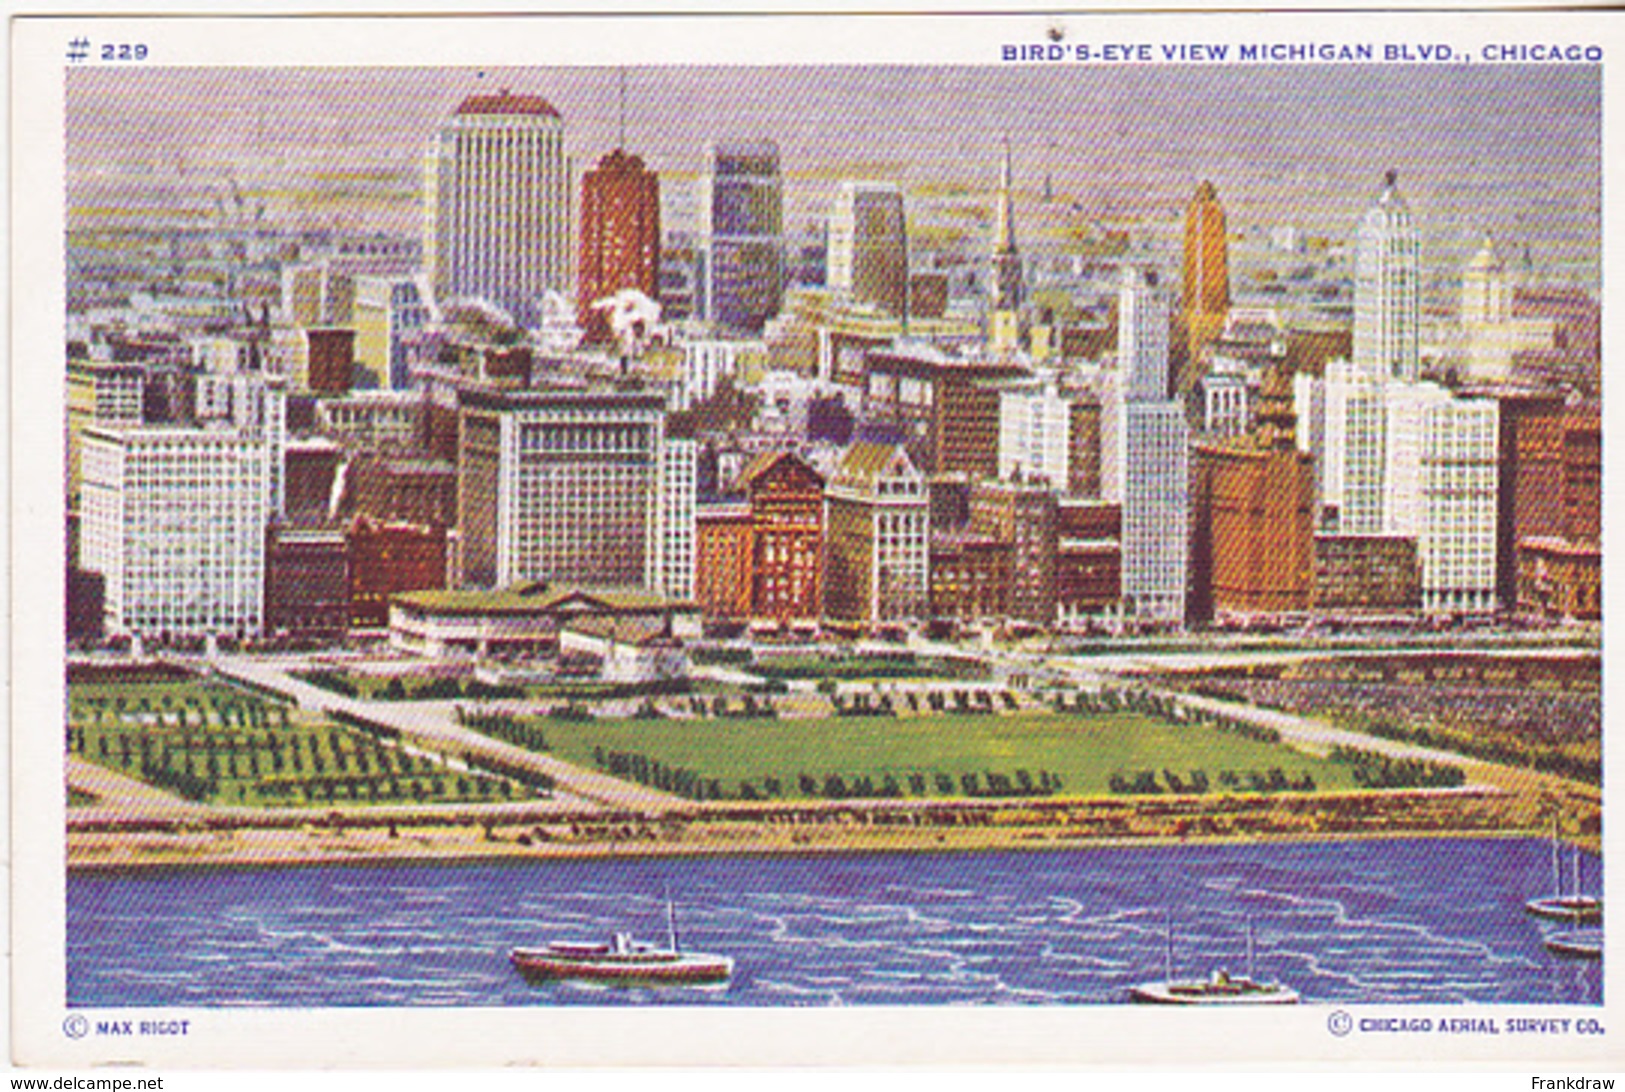 Postcard - Bird's Eye View Michigan Blvd. Chicago - Card No. 229 - VG - Unclassified